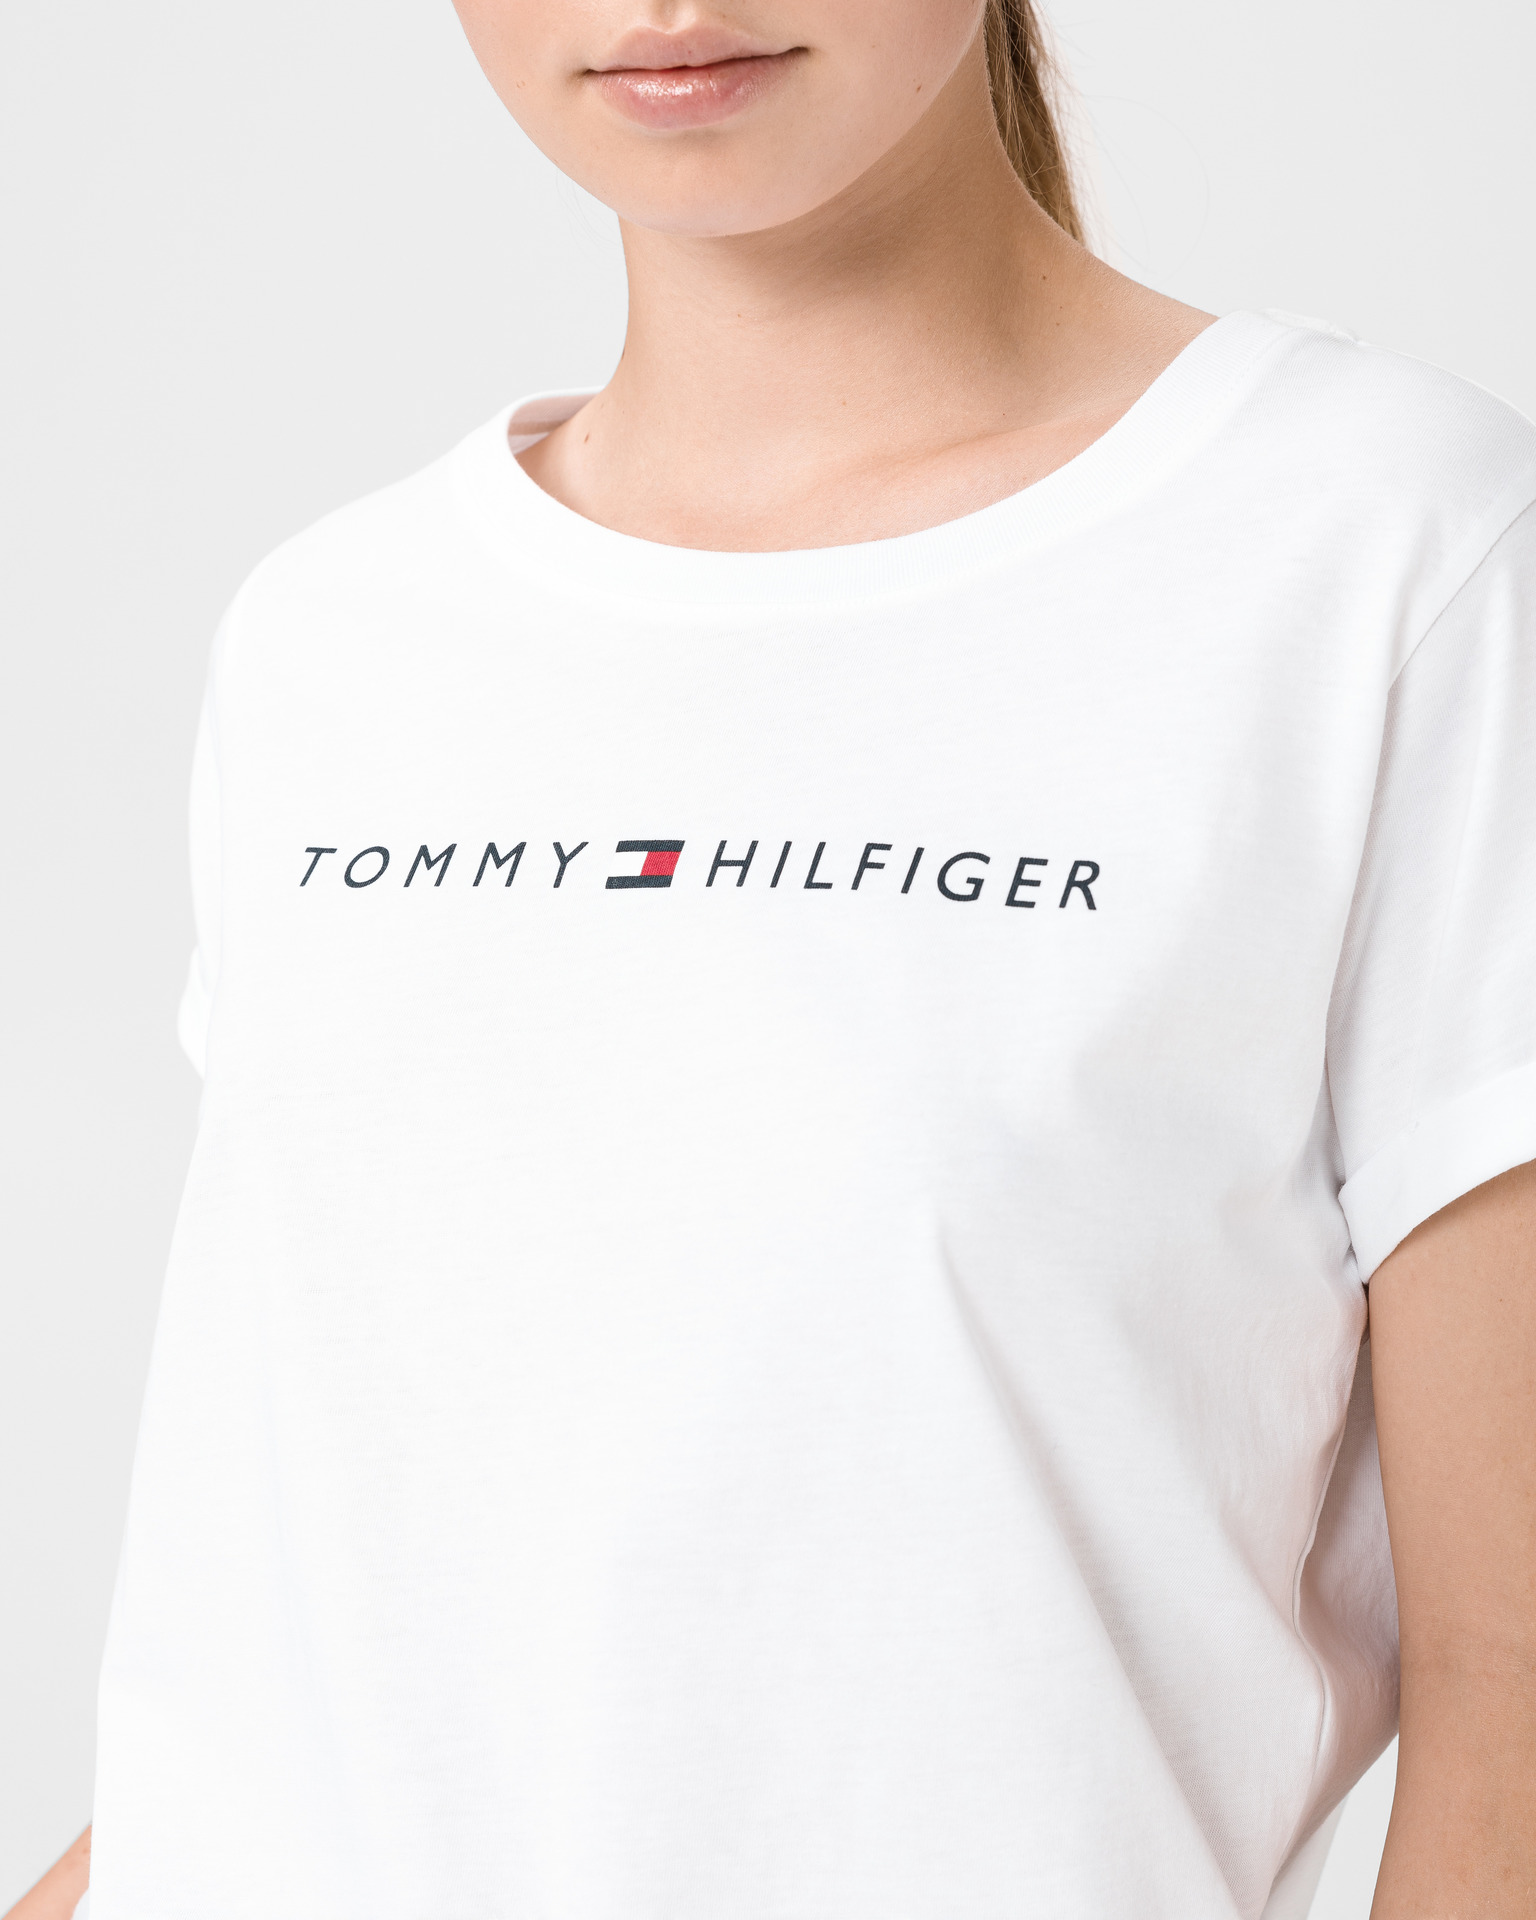 tommy hilfiger original t shirt